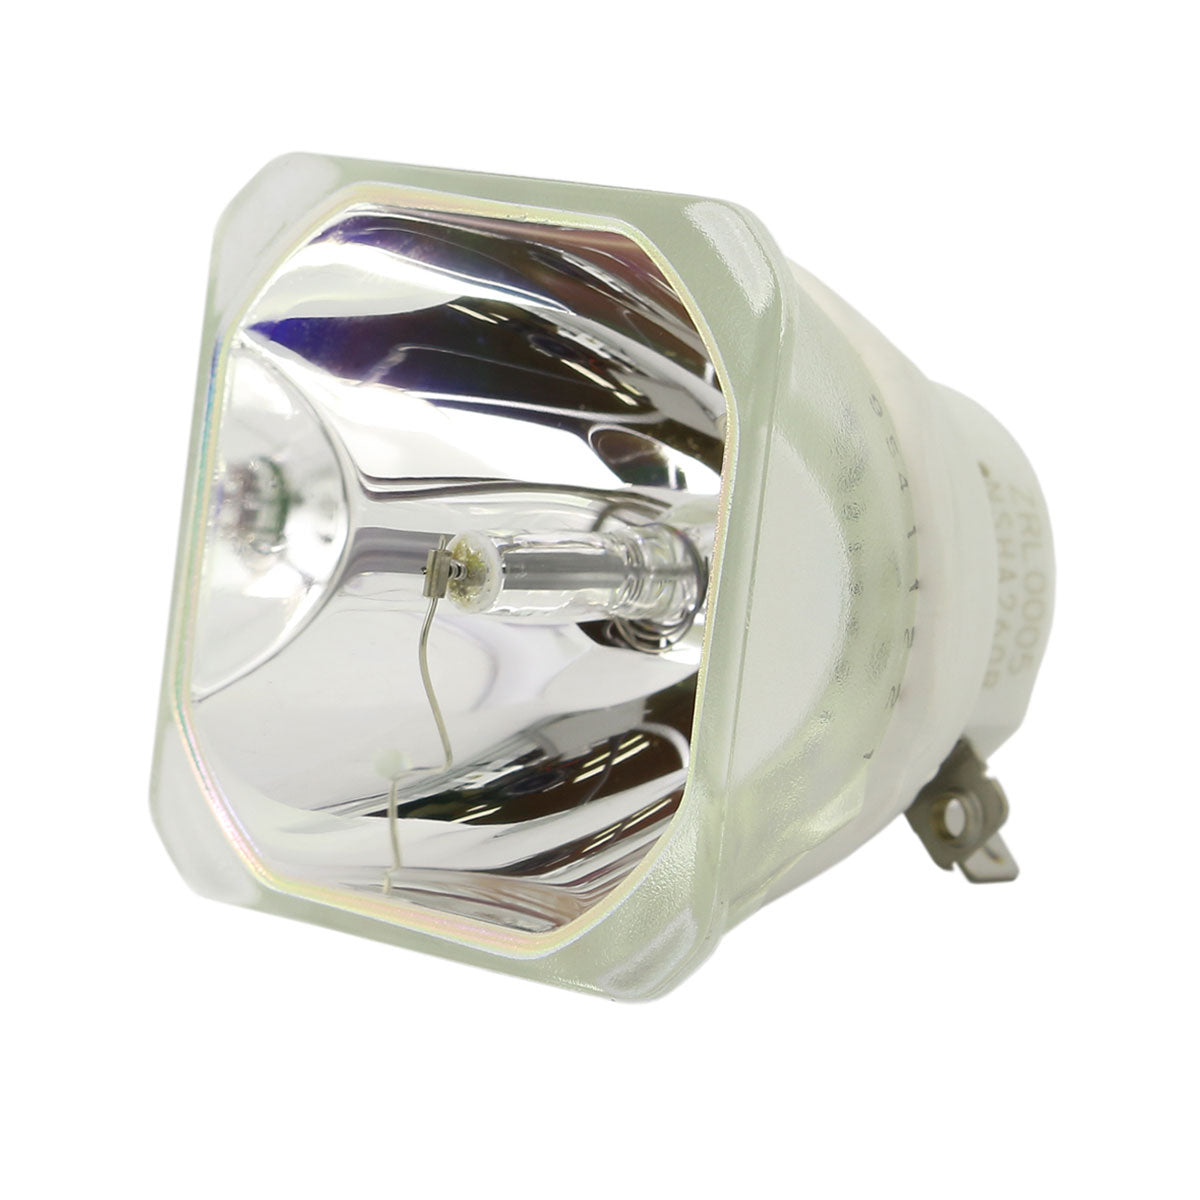 RICOH 308929 Ushio Projector Bare Lamp